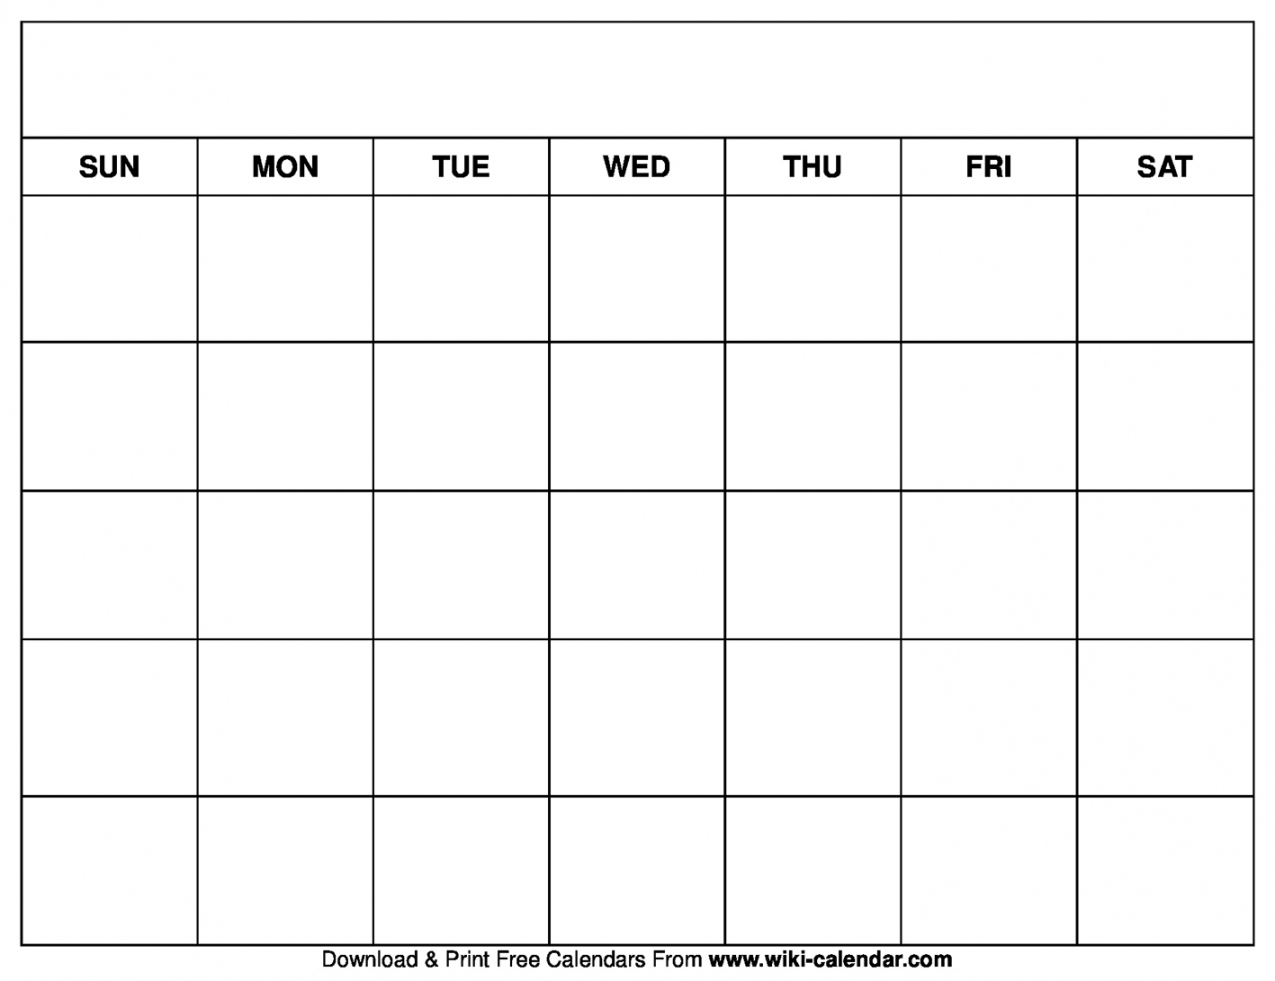 Free Printable Calendars By Month - Printable - Printable Blank Calendar Templates - Wiki Calendar